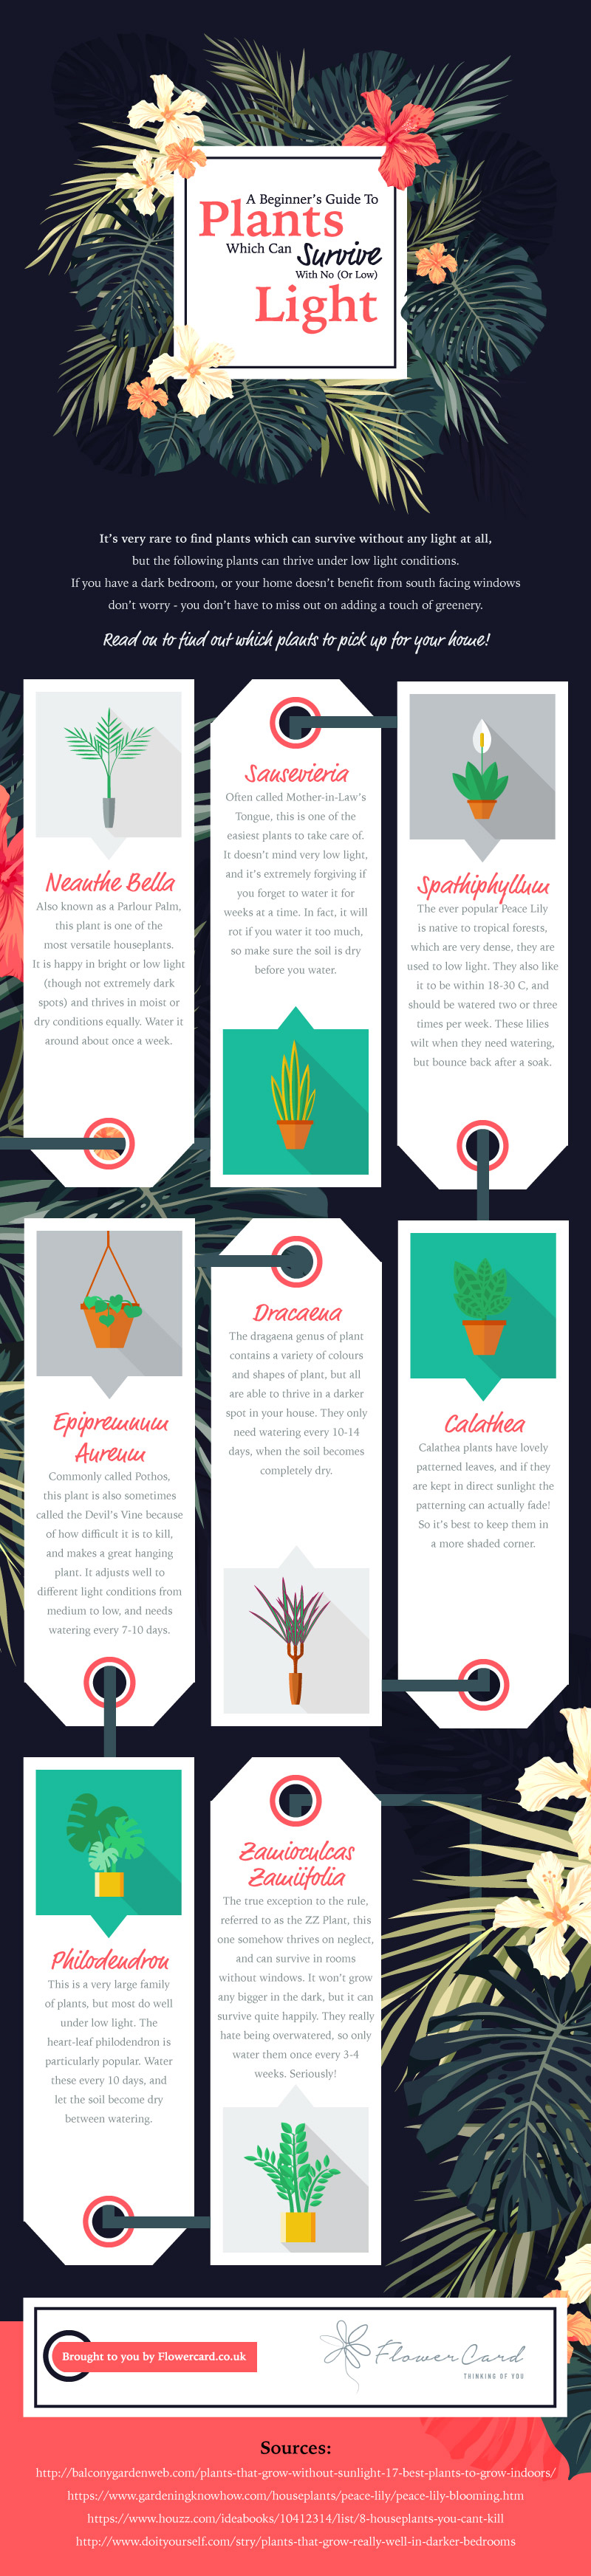 low-light plants infographic